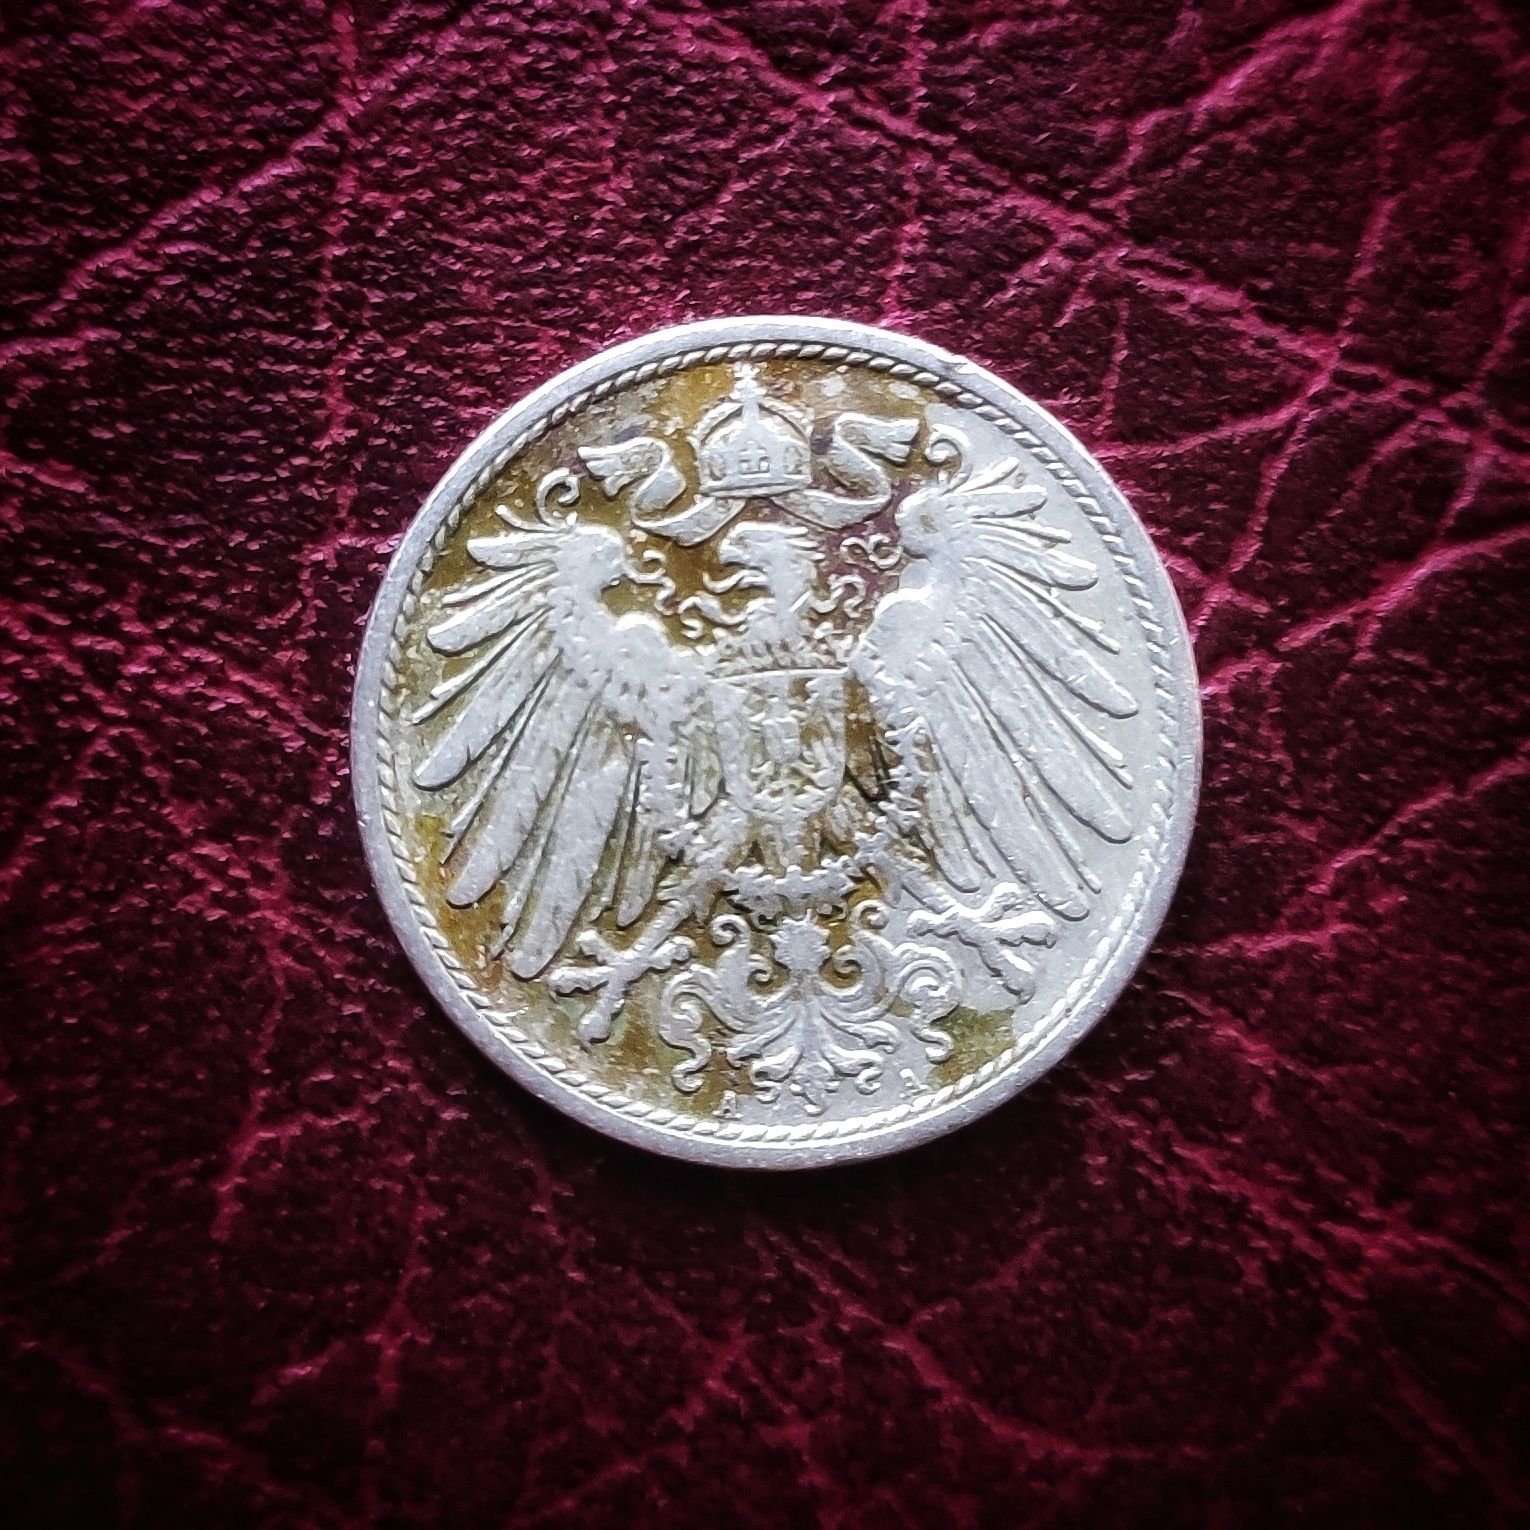 10 Pfenning z 1900 roku - Niemcy